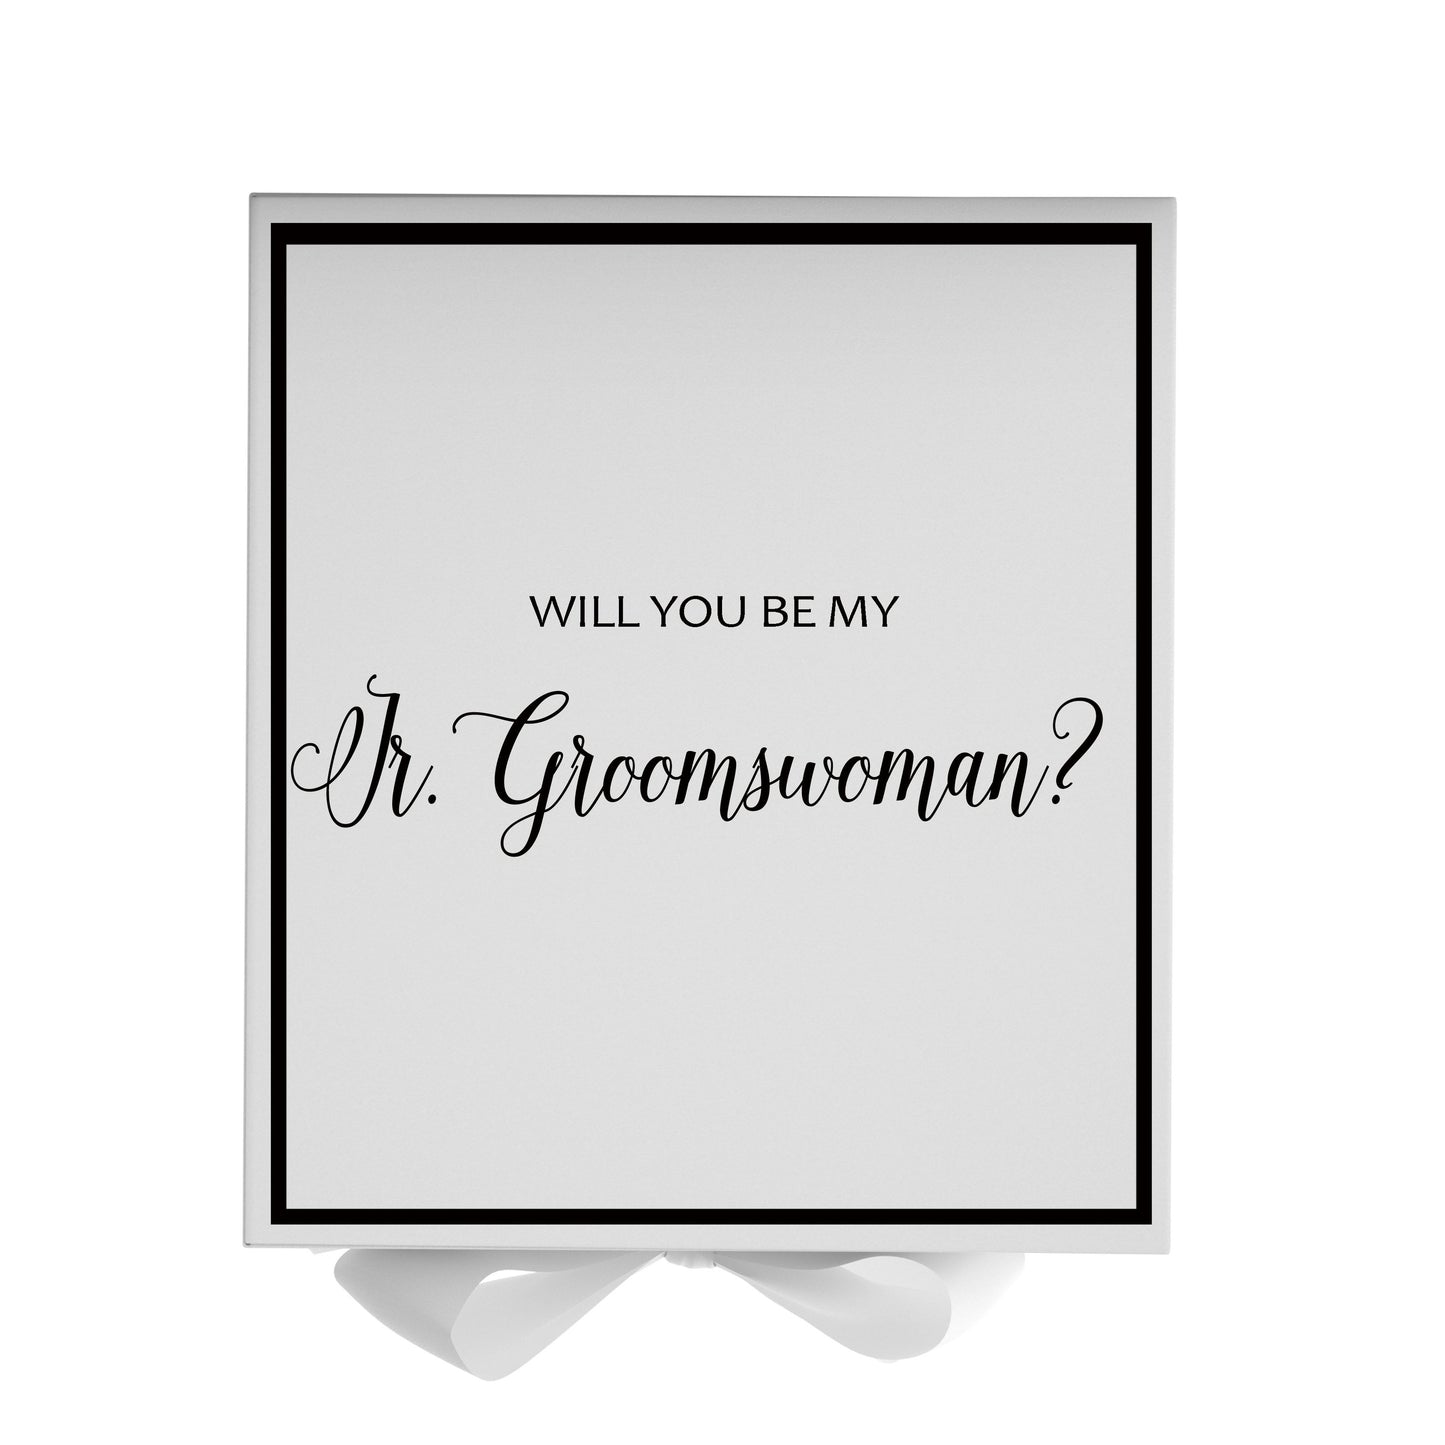 Will You Be My Jr Groomswoman? Proposal Box White -  Border